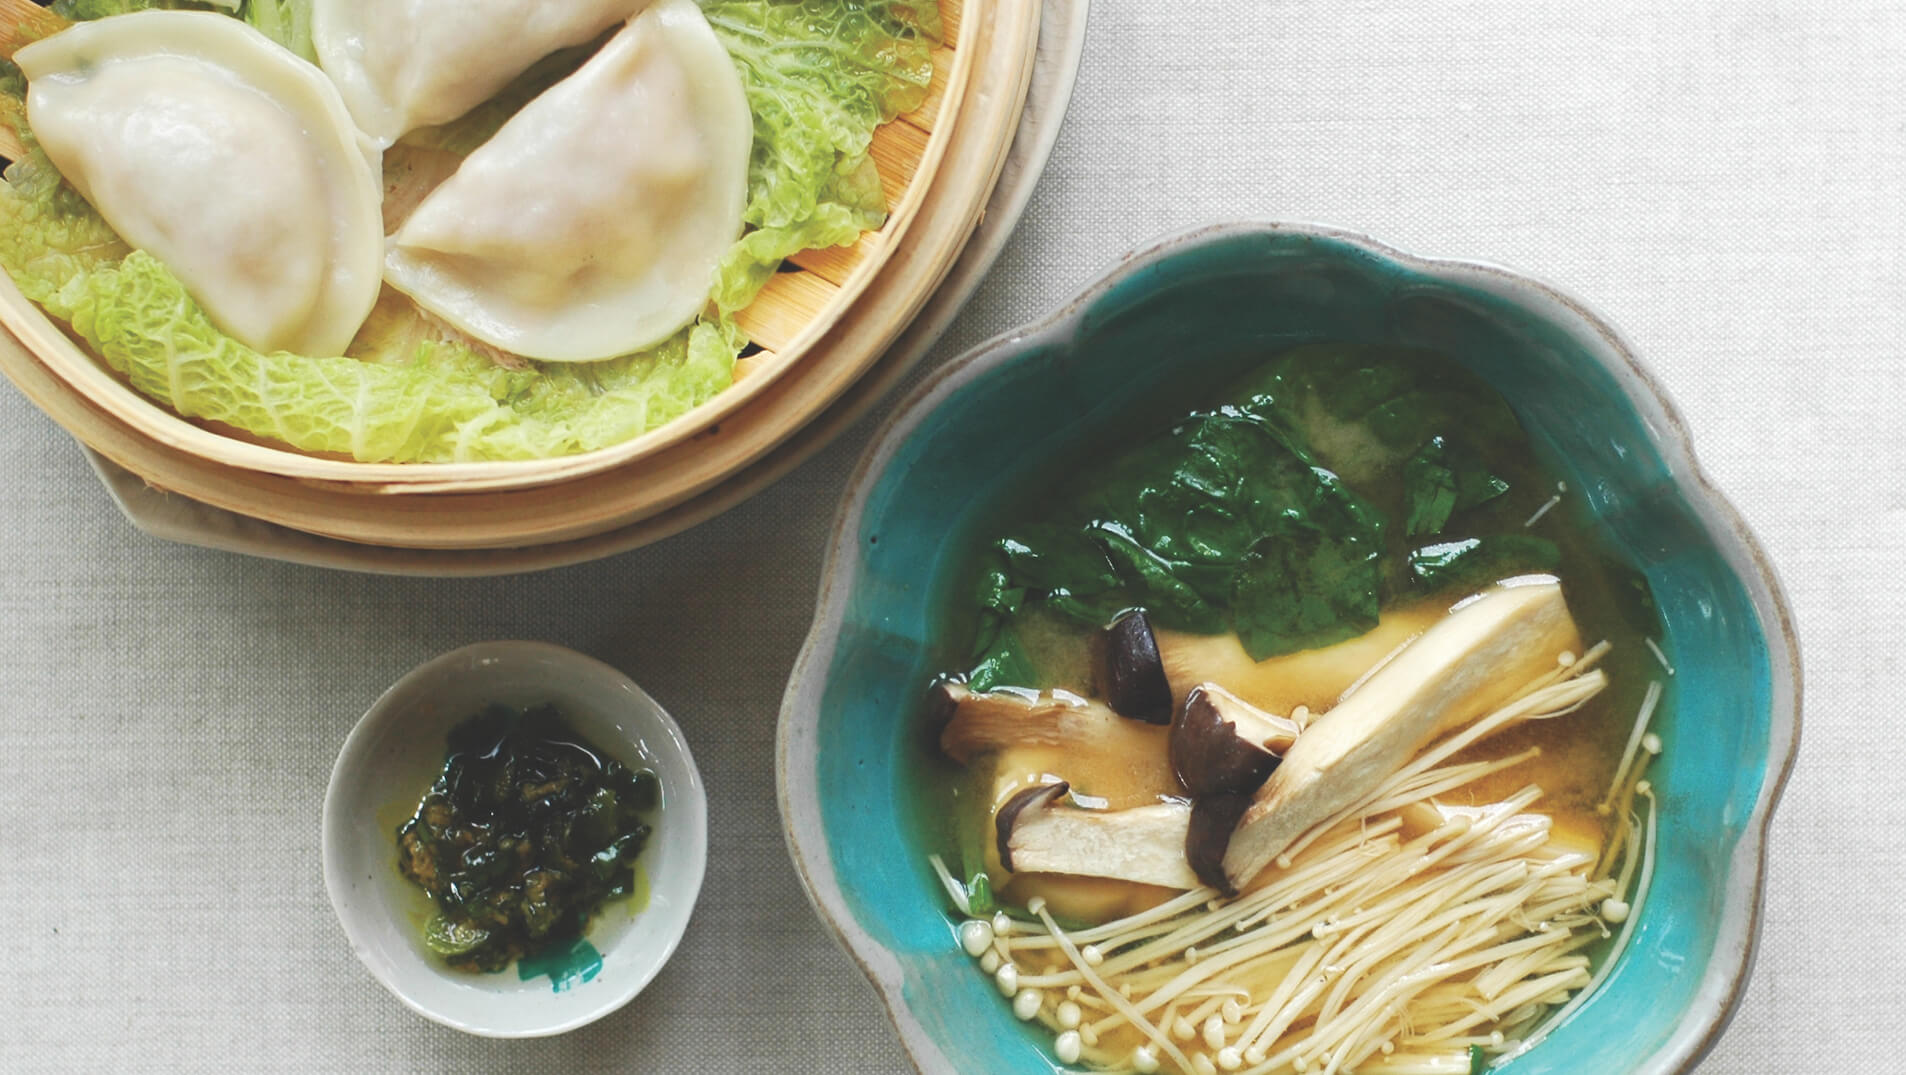 House of Goodness Tofu and shiitake mushroom dumplings with miso ginger broth